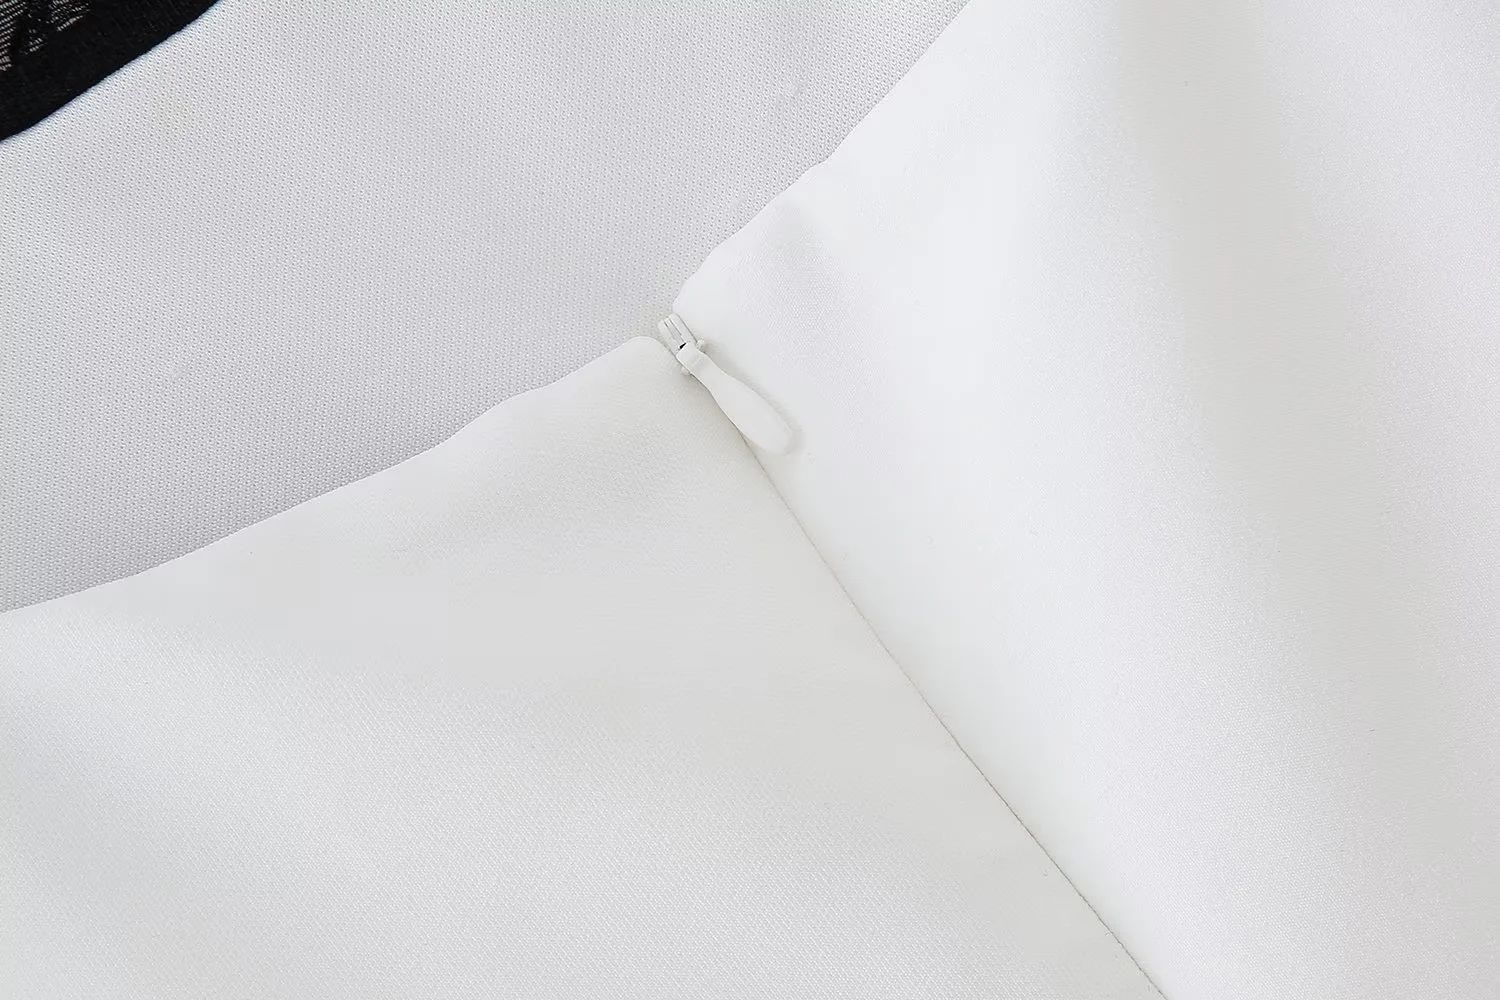 Fashion White Polyester Lace Patchwork Suspender Skirt,Mini & Short Dresses